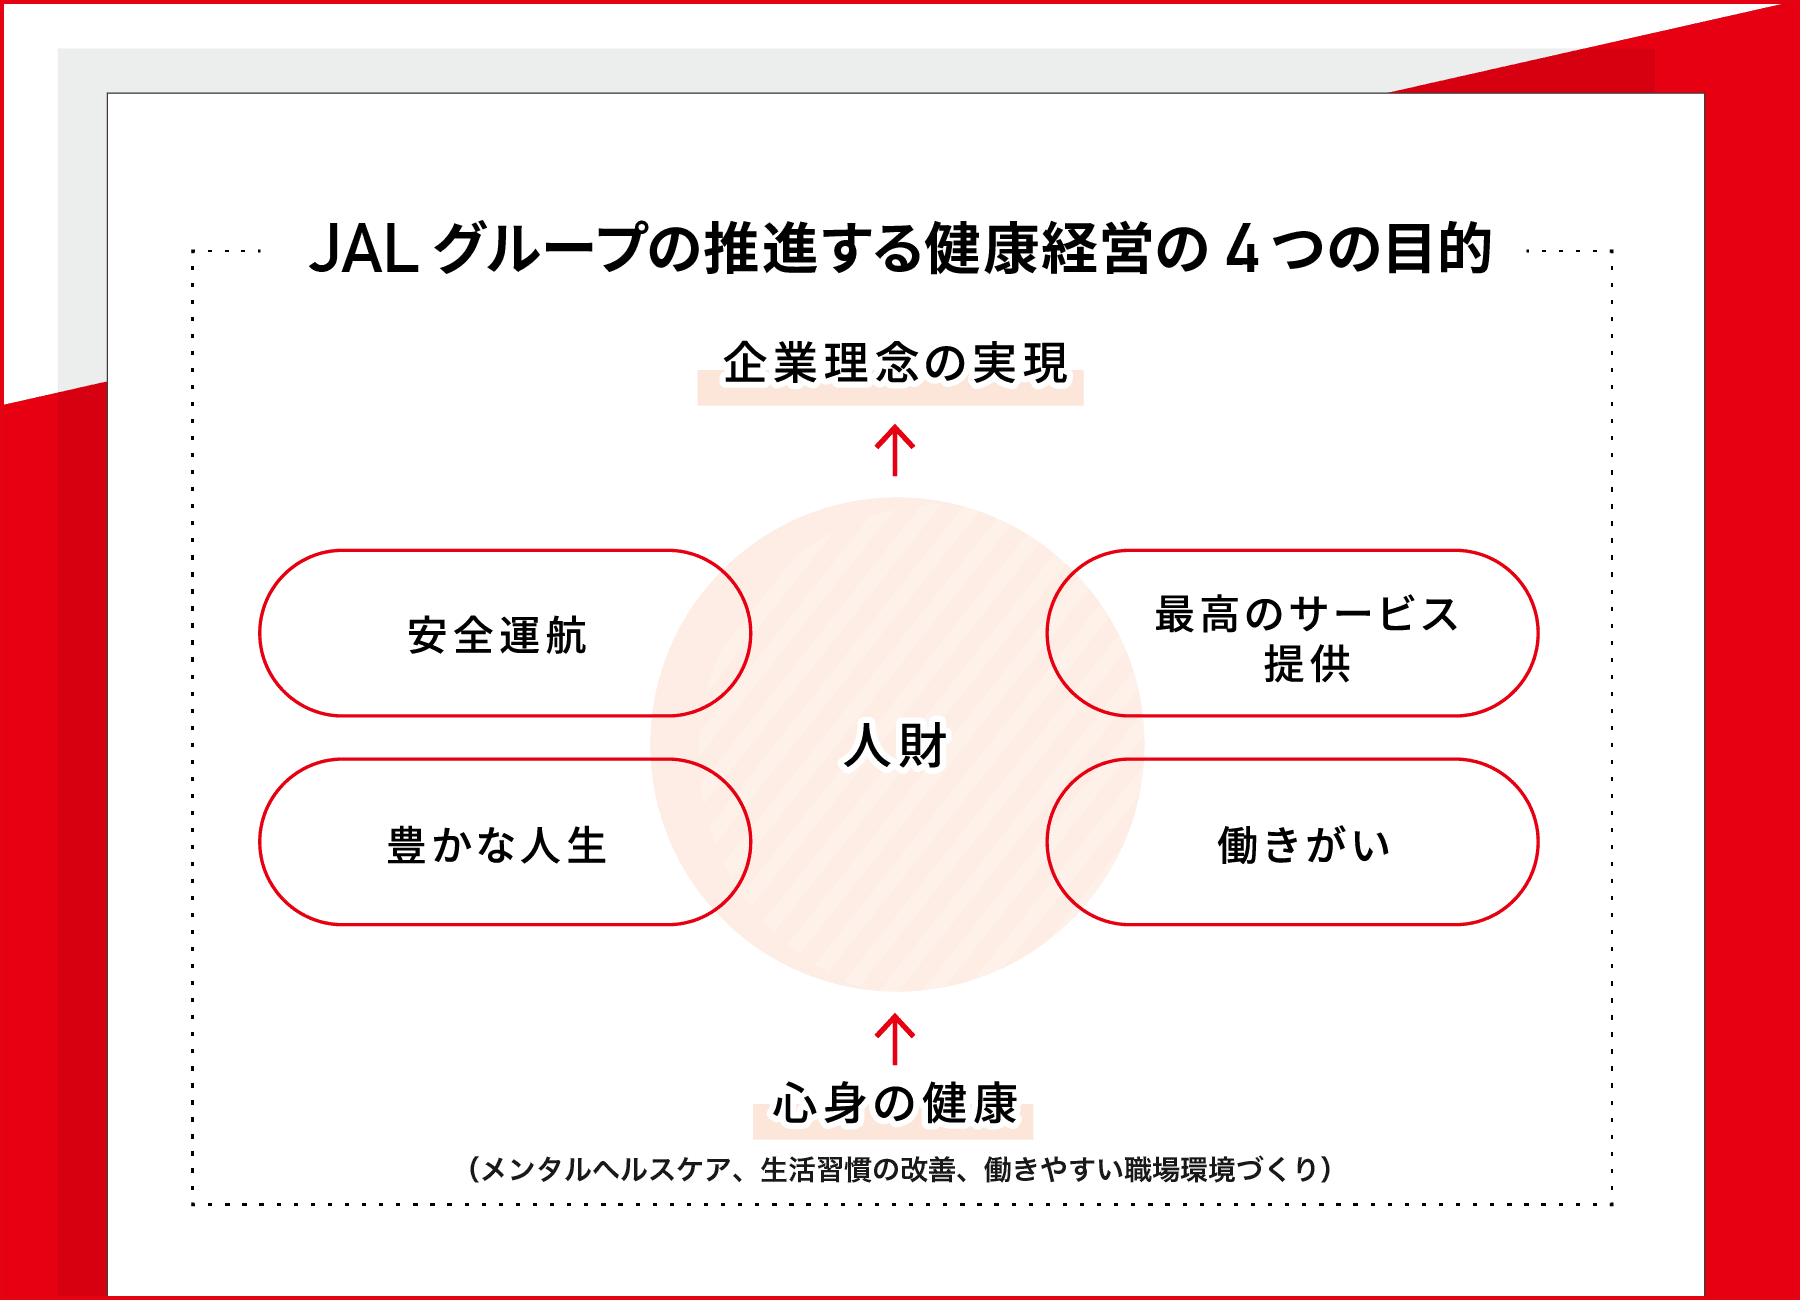 JALグループの推進する健康経営の4つの目的